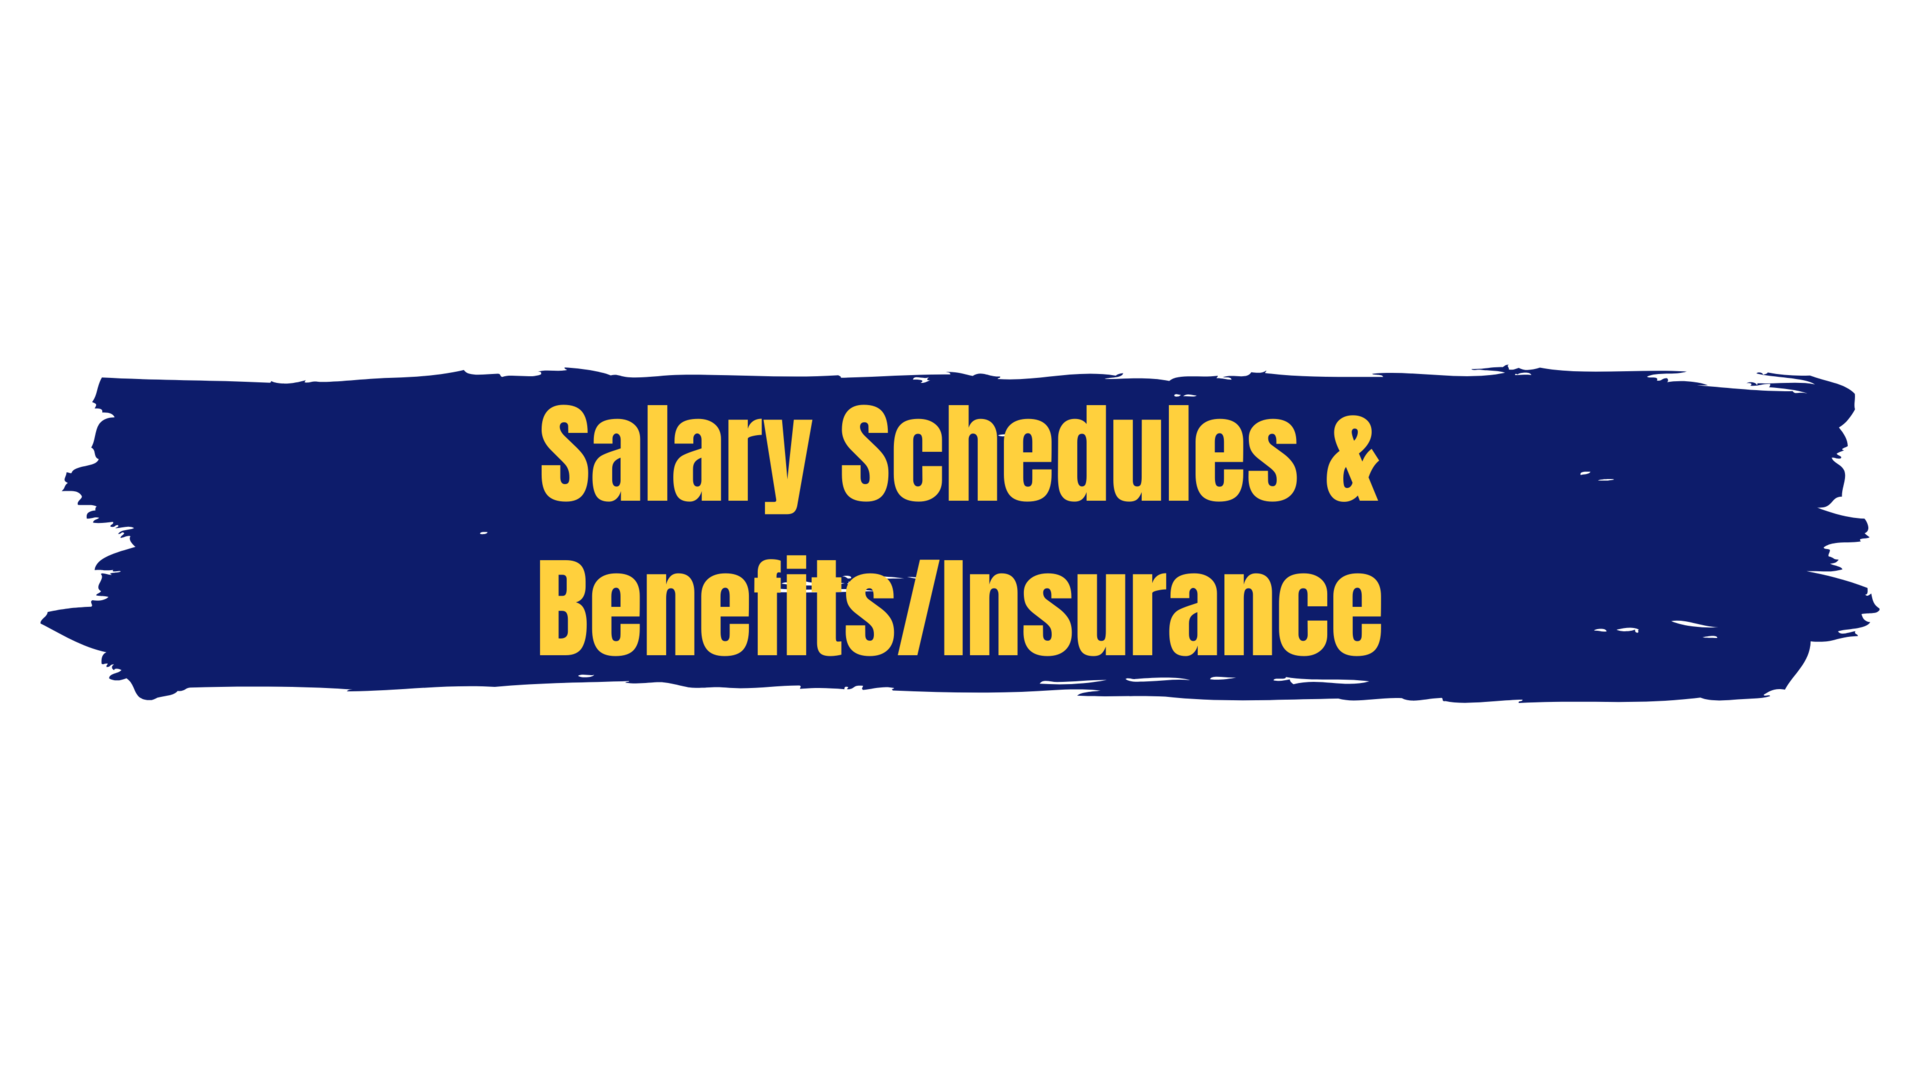 Salary Schedules & Benefits/Insurance